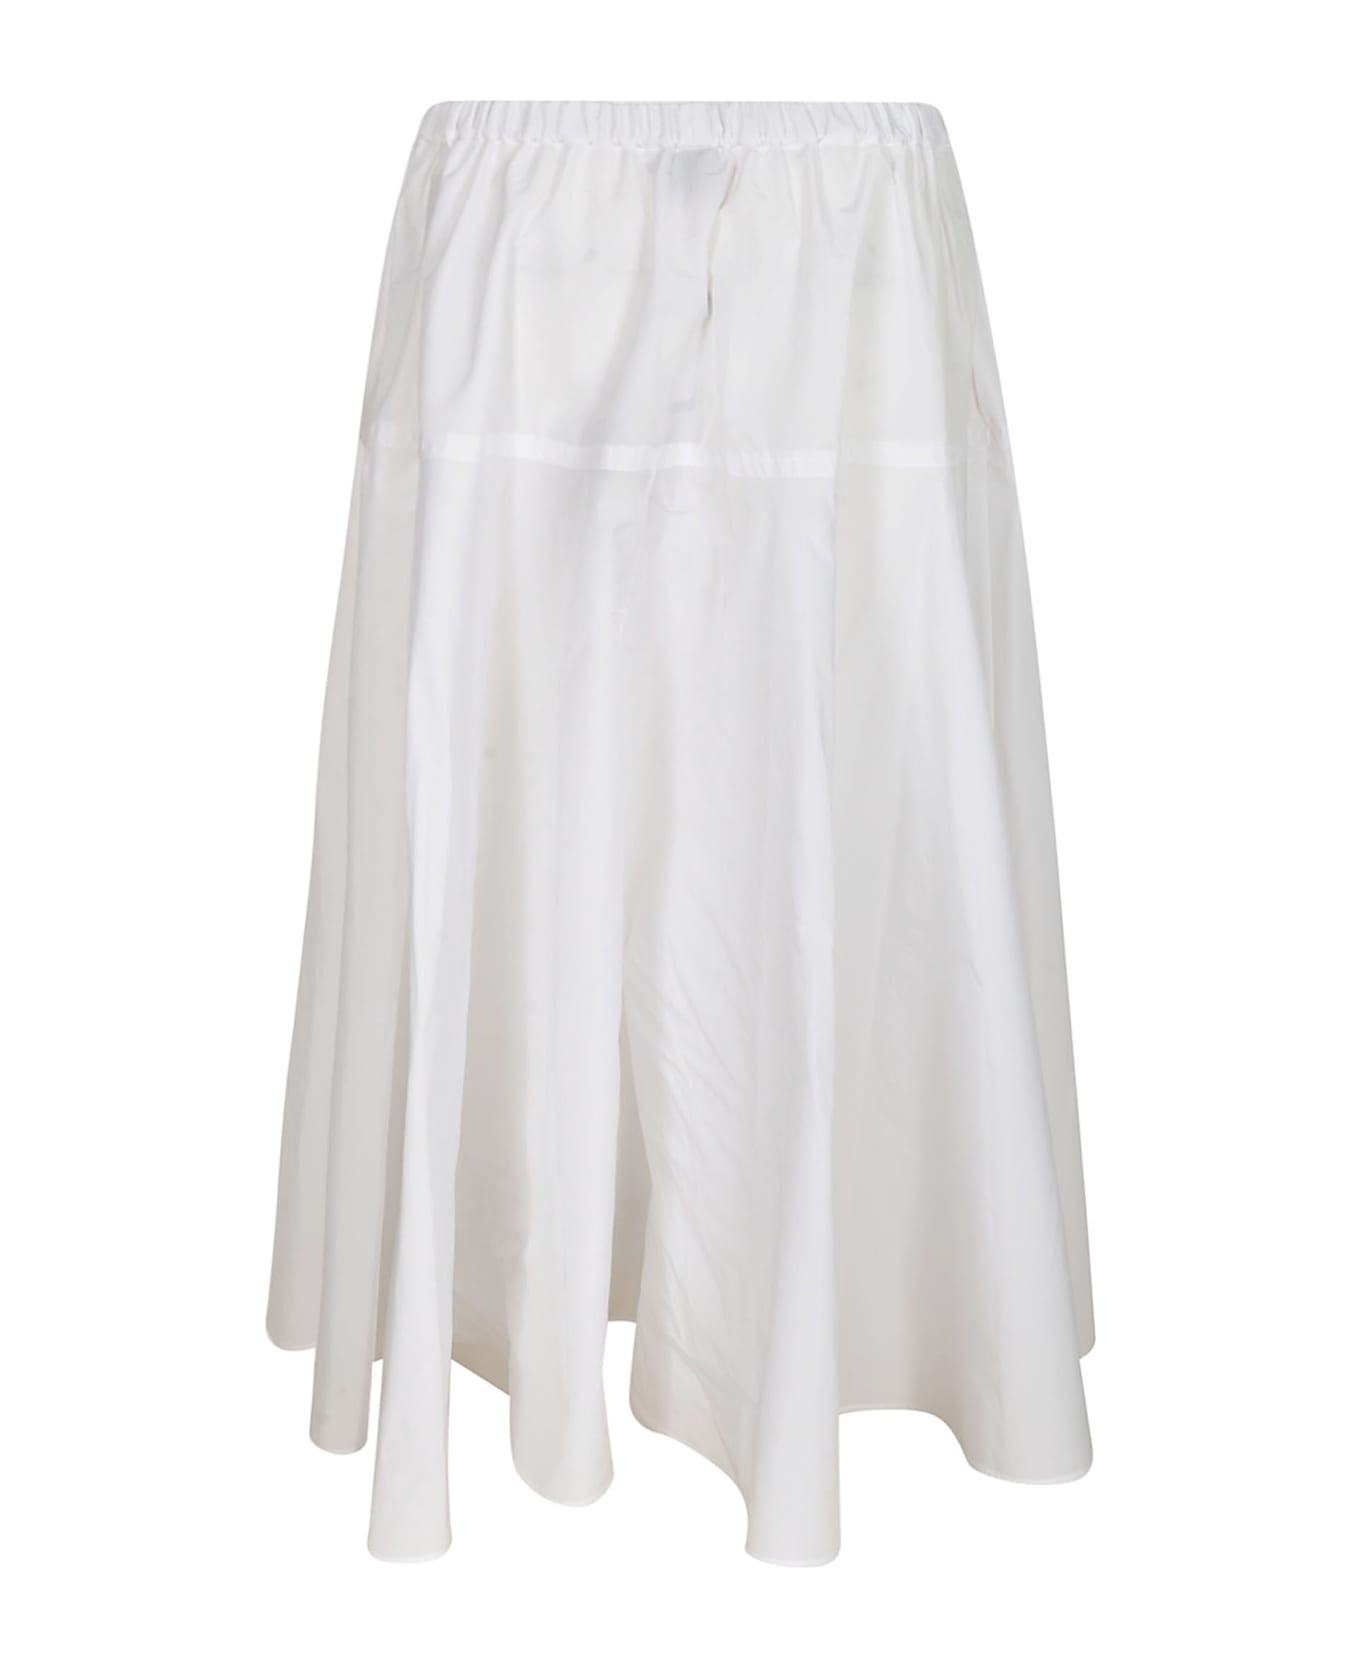 Patou White Recycled Polyester Skirt - White